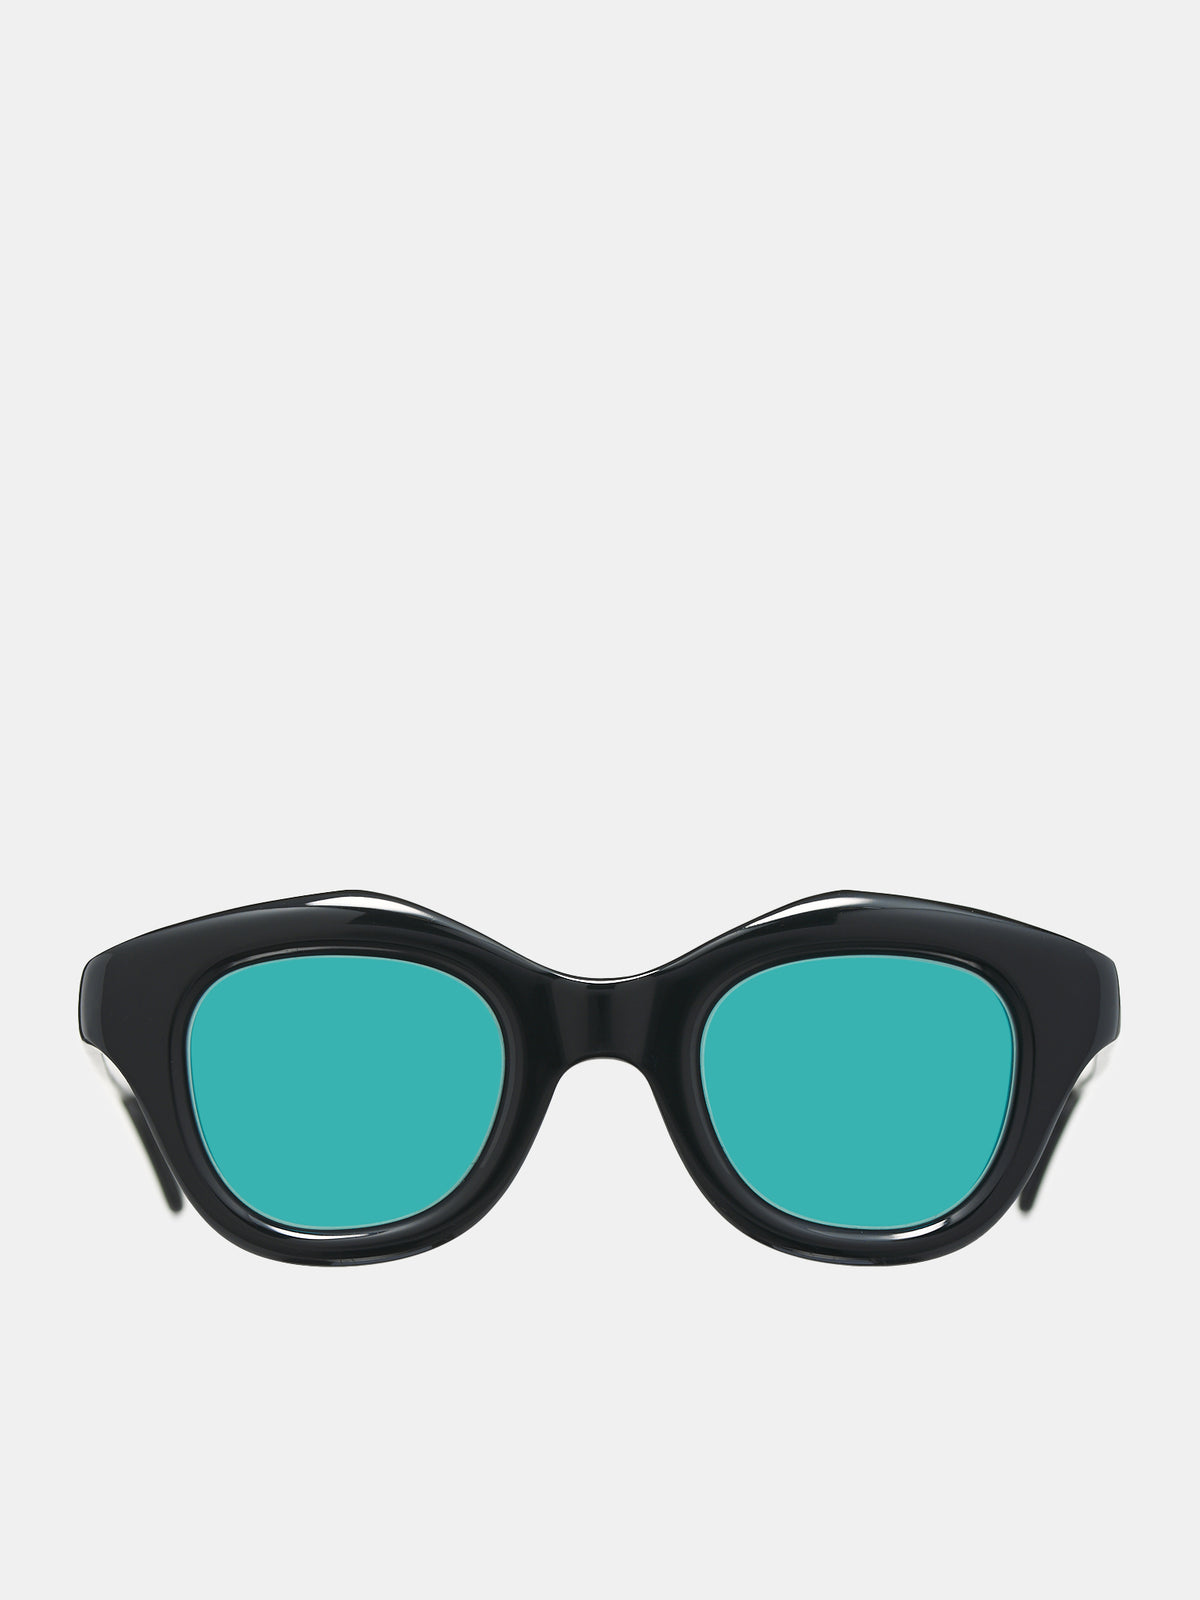 Hook Sunglasses (HOOK-BLACK-BLUE-GREEN4)